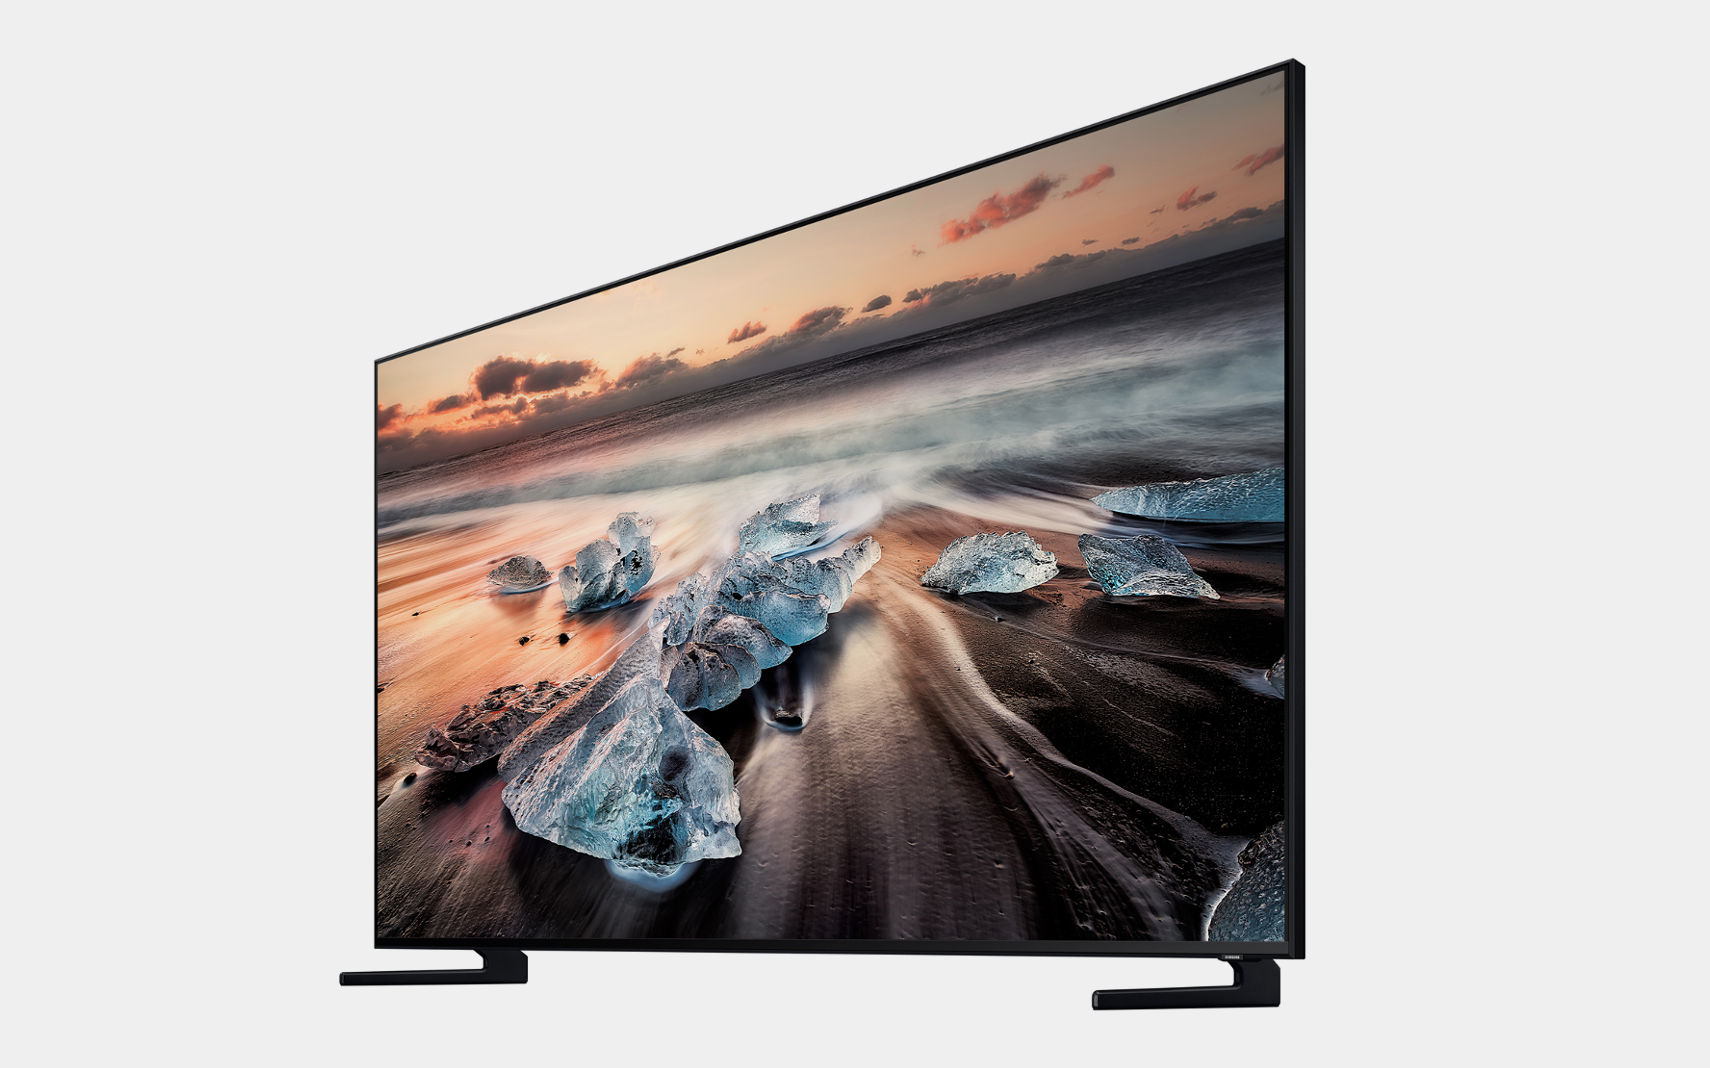 Samsung Q900R 8k TV